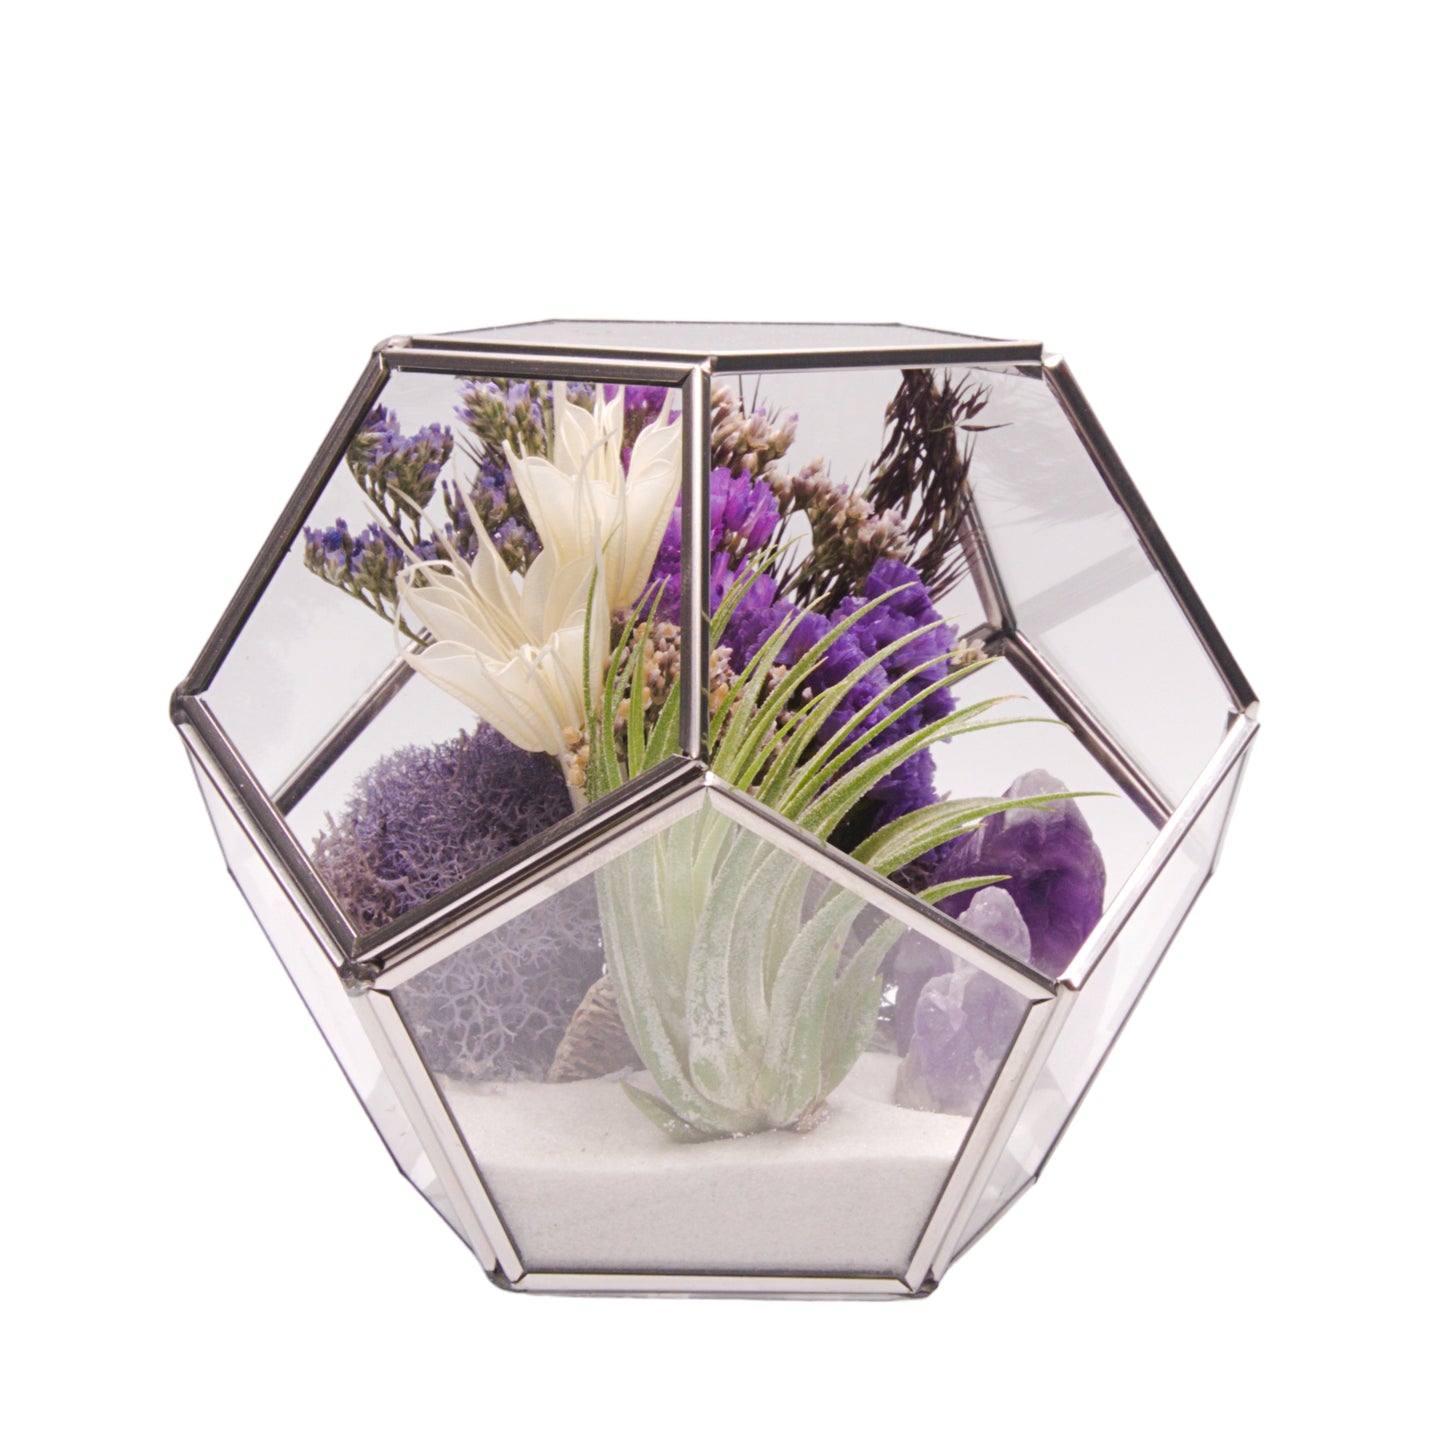 Victorian Bowl Airplant Terrarium - Amethyst Crystals